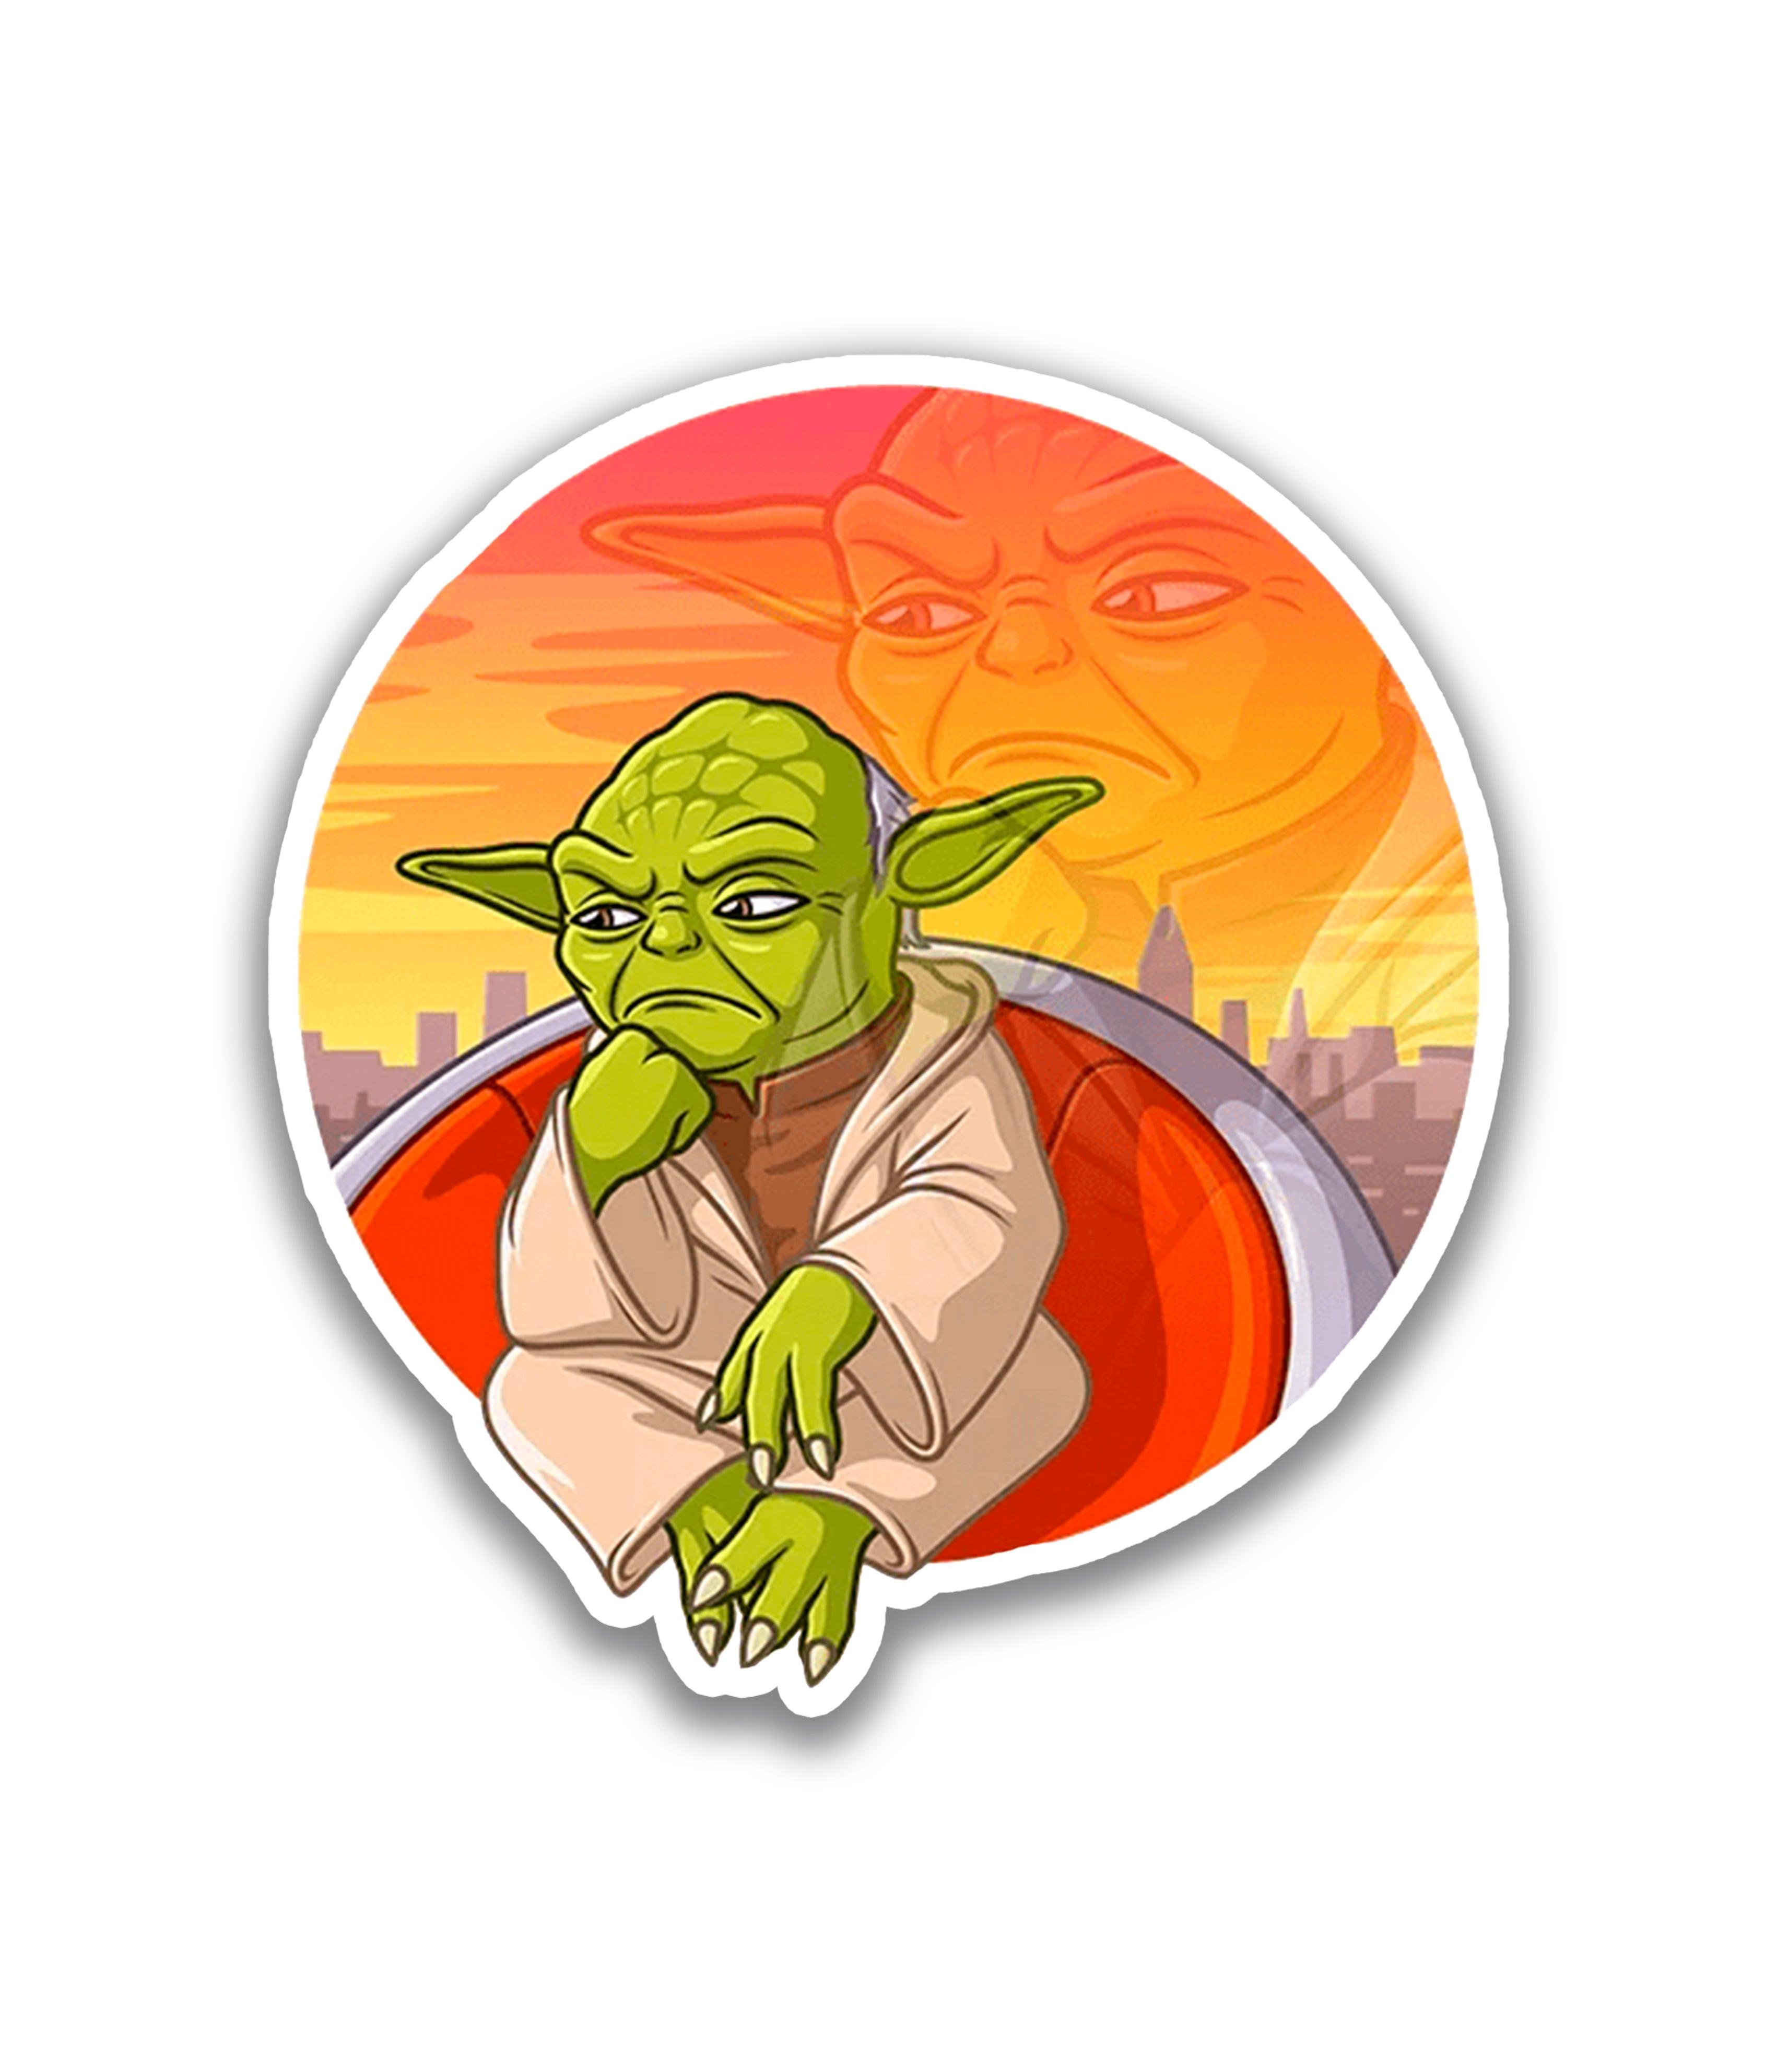 Yoda pensativo - Rei do Sticker